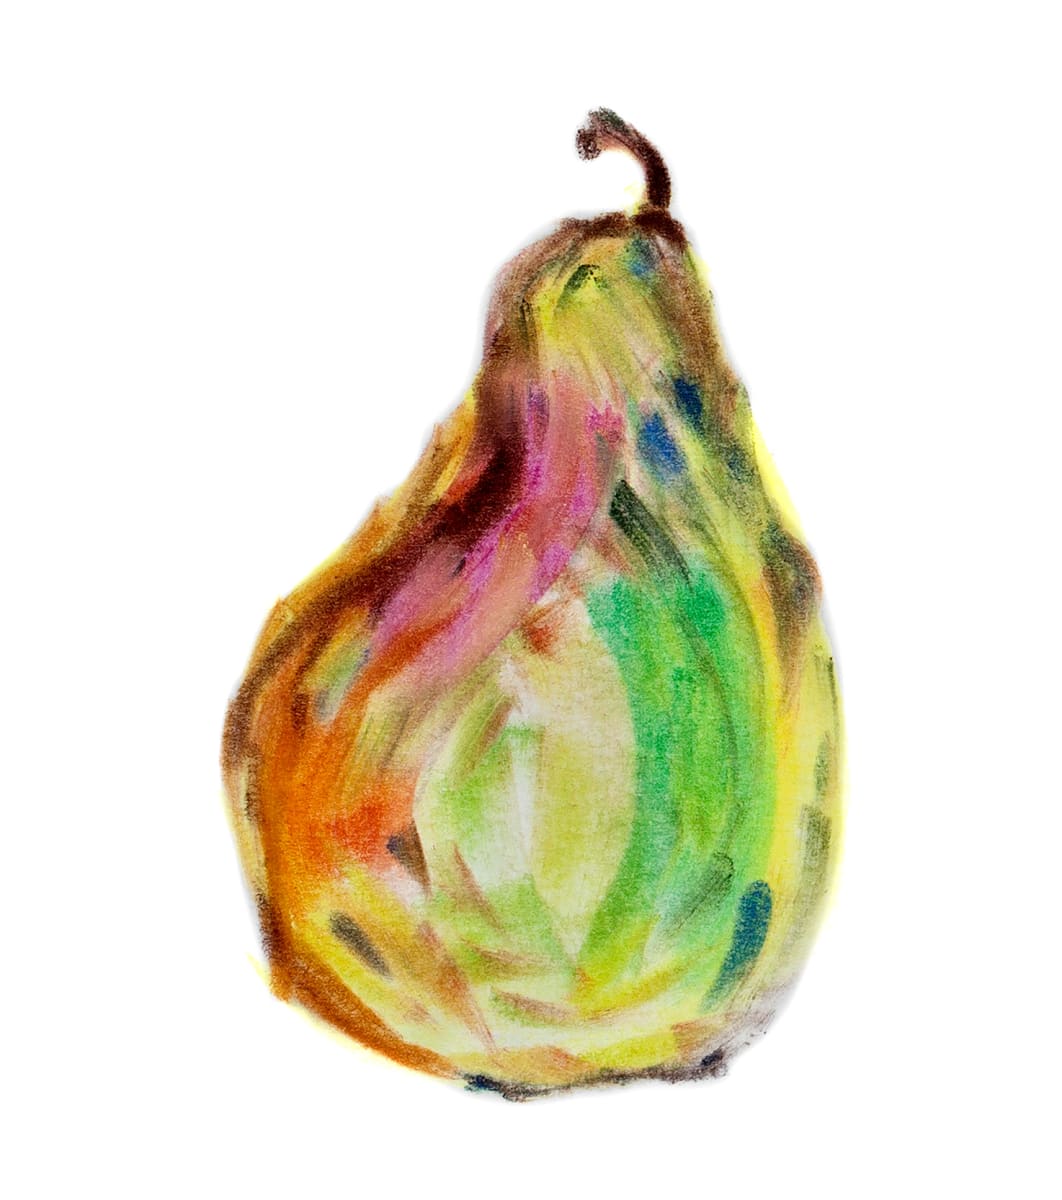 Pear Study II by Margaret Galvin Johnson  Image: Pear Study II